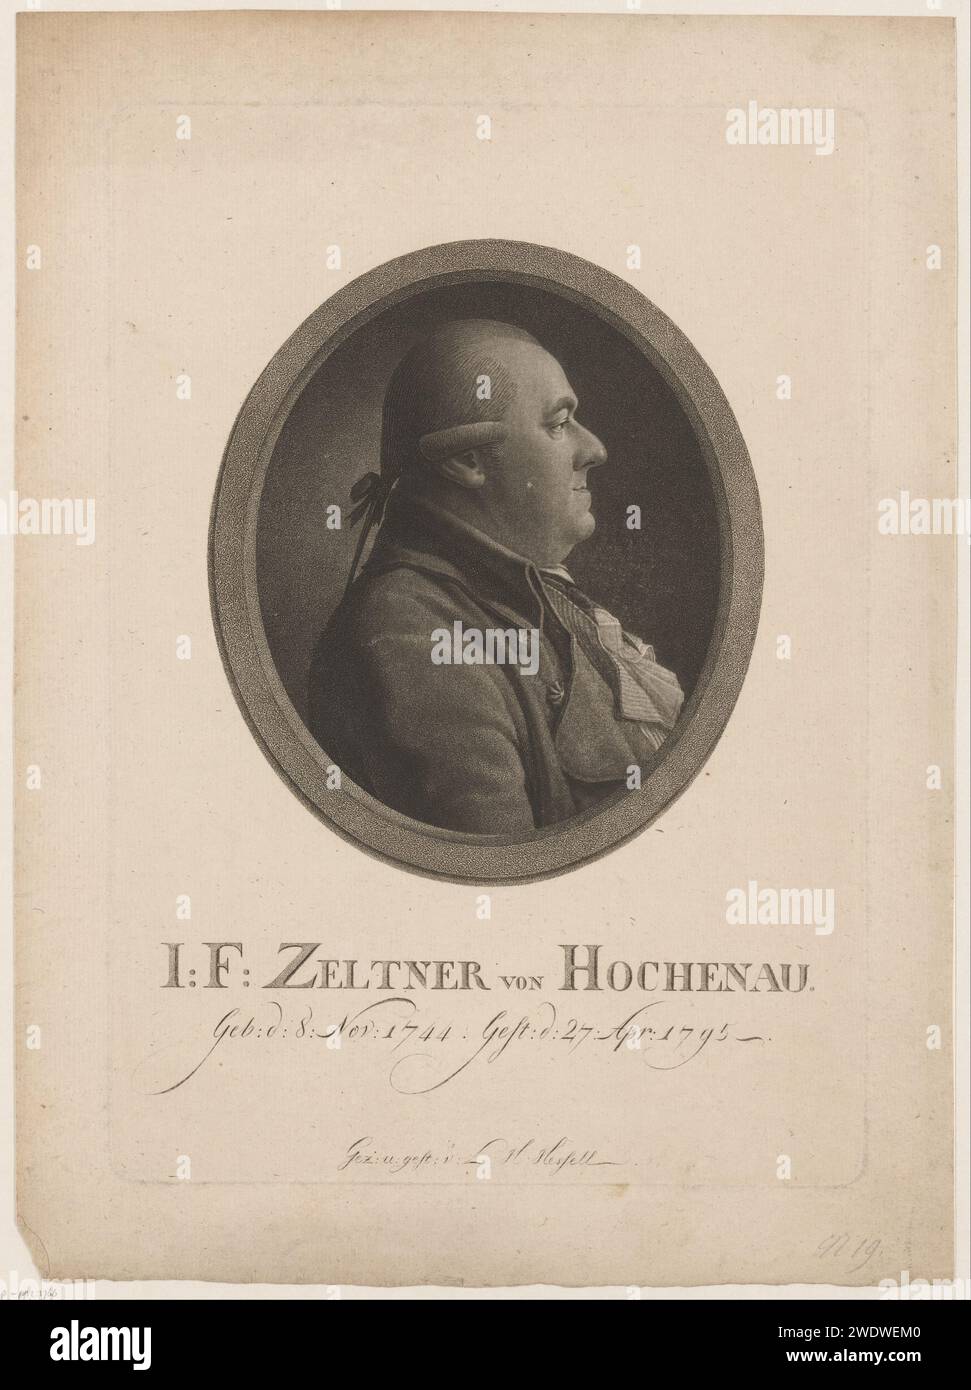 Portrait van i.F. Zeltner of Hochenau, Leonhard Heinrich Hessell, 1795 - 1830 print   paper  historical persons Stock Photo